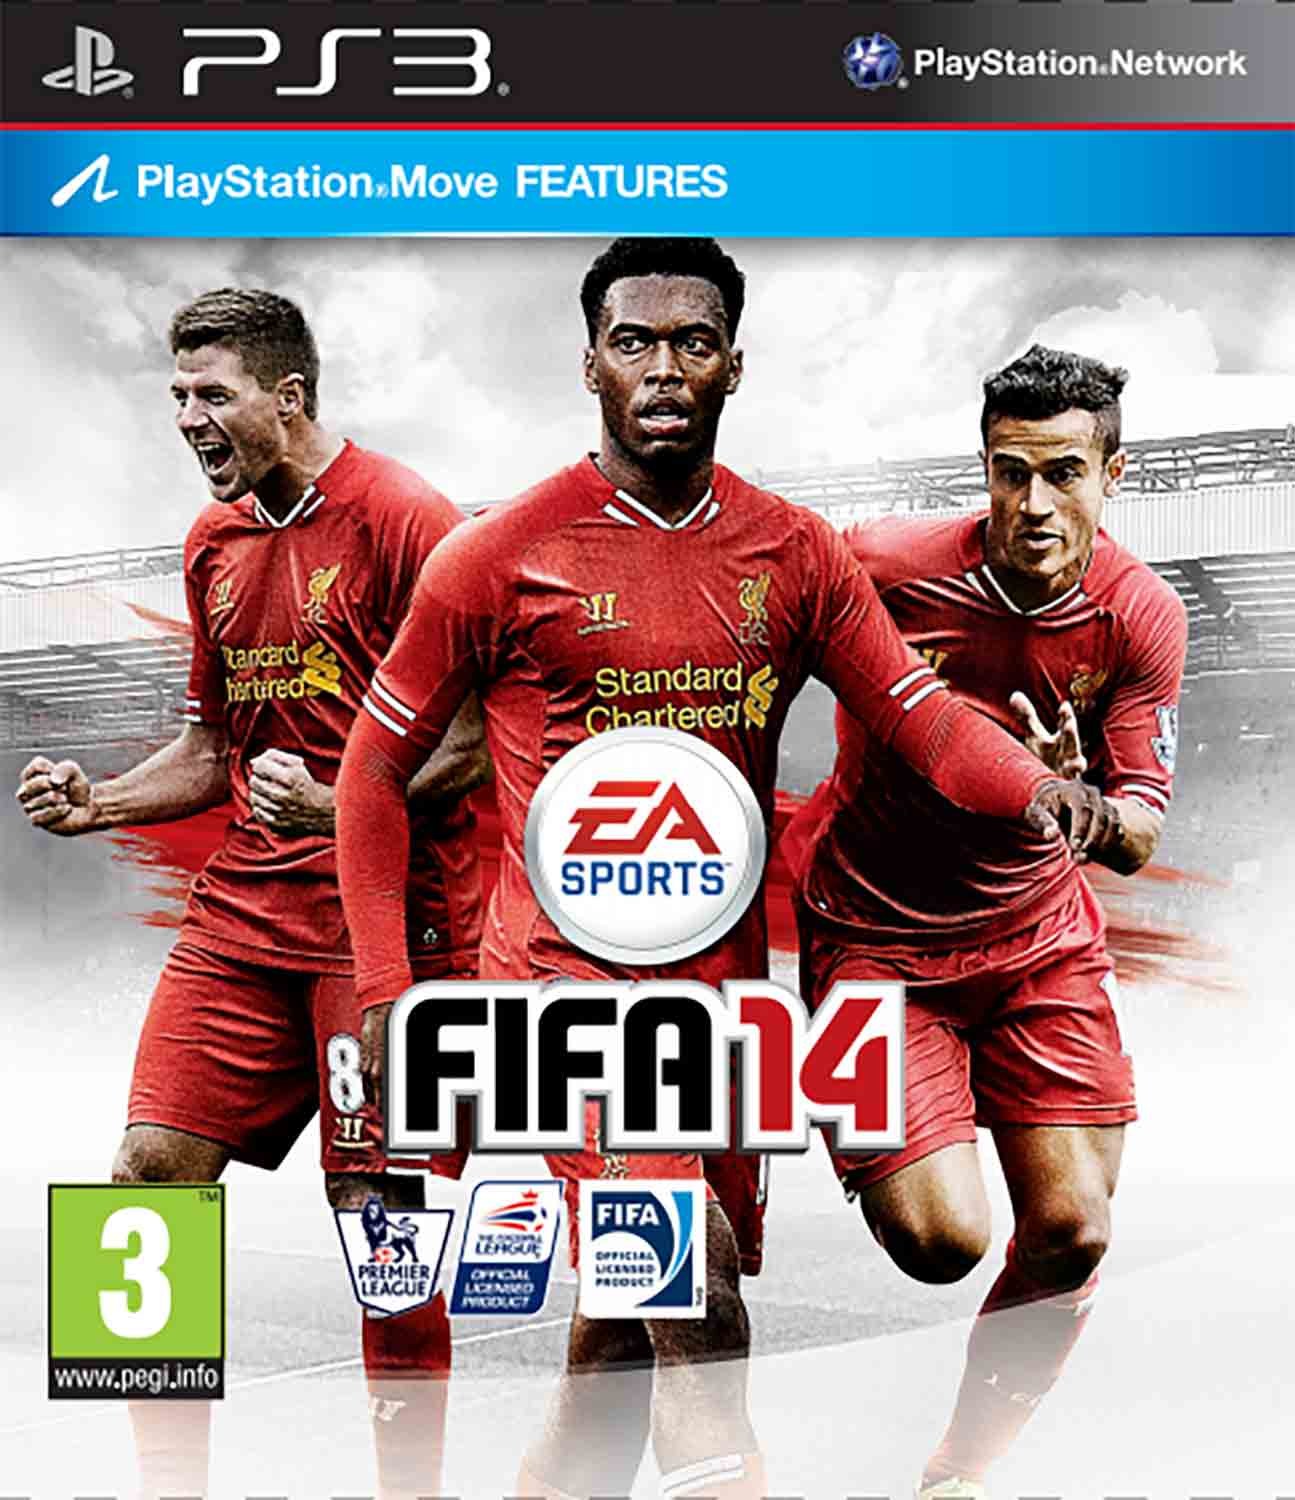 Hra FIFA 14 pro PS3 Playstation 3 konzole